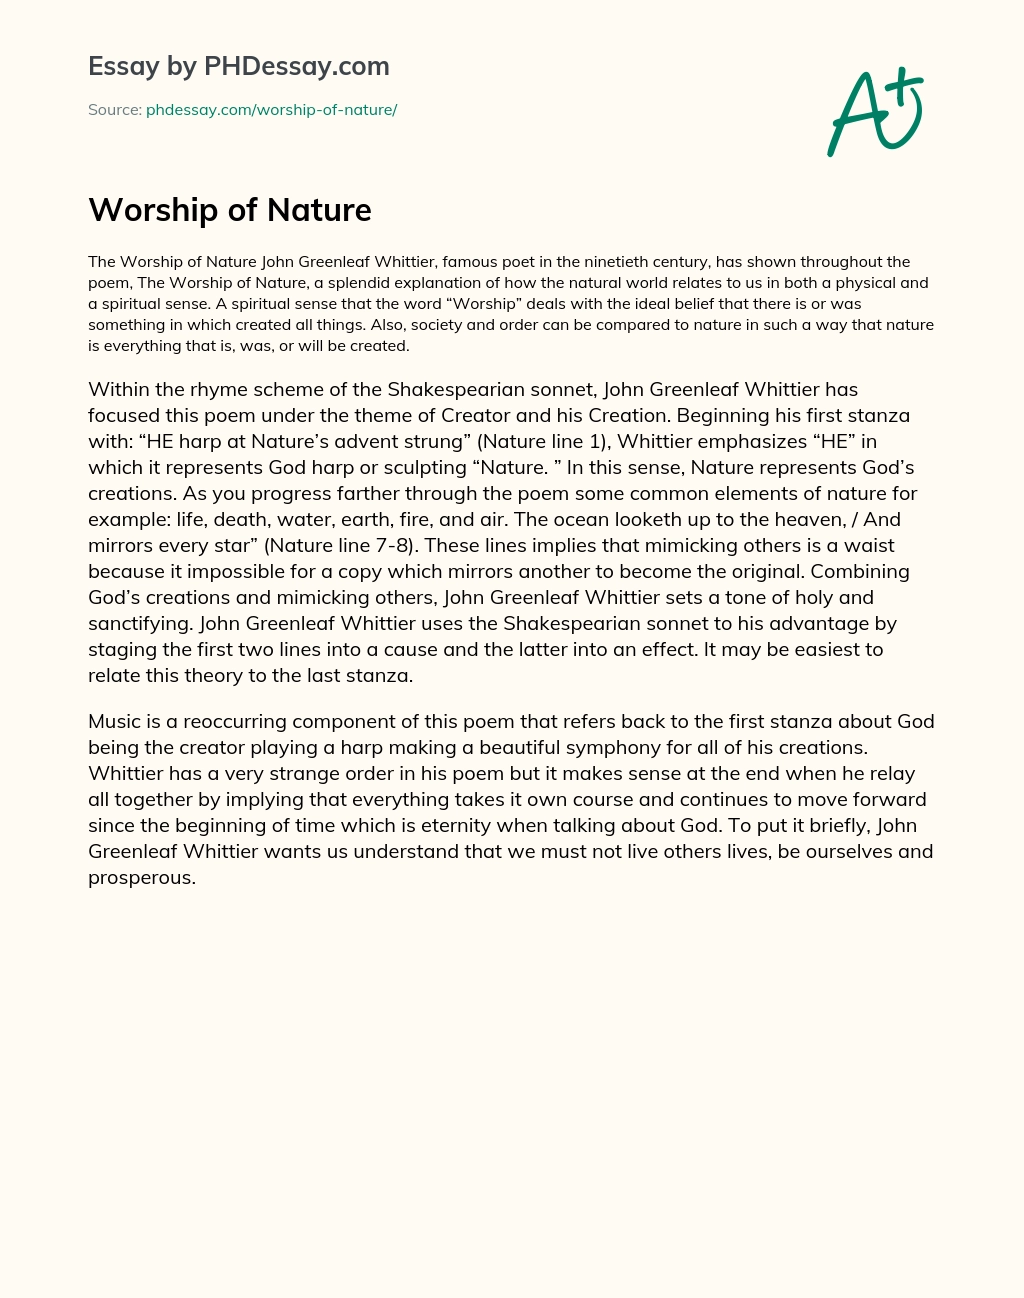 Worship of Nature essay